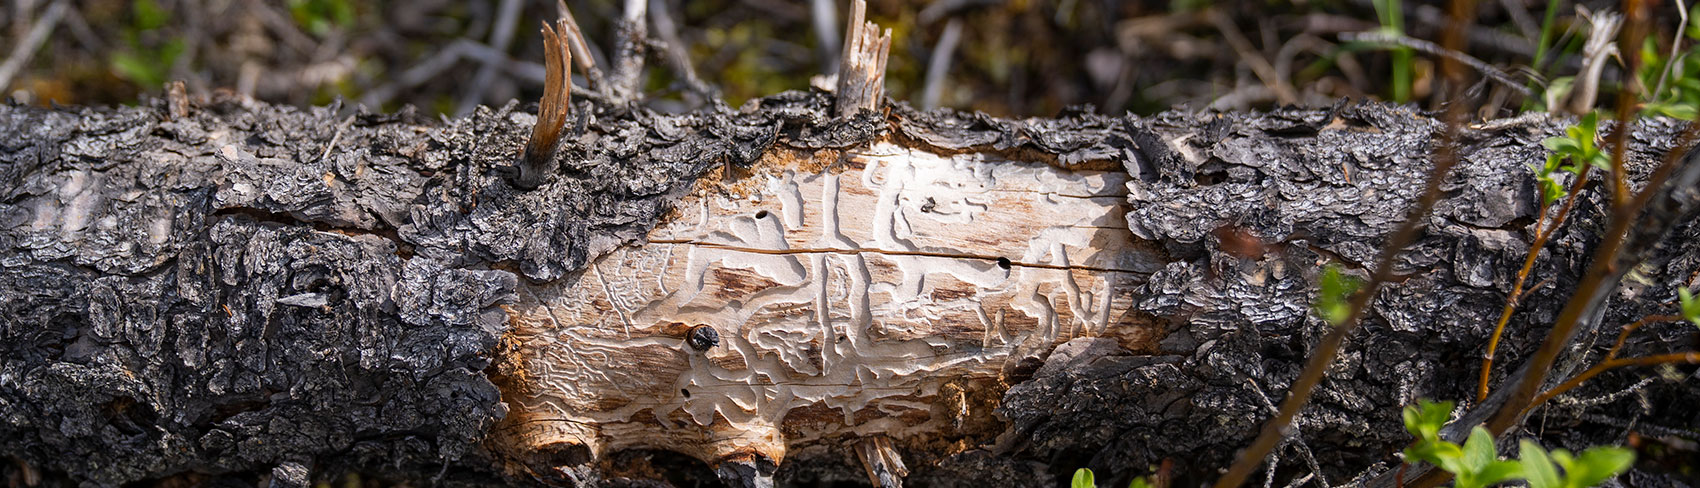 Log eaten away by termites.